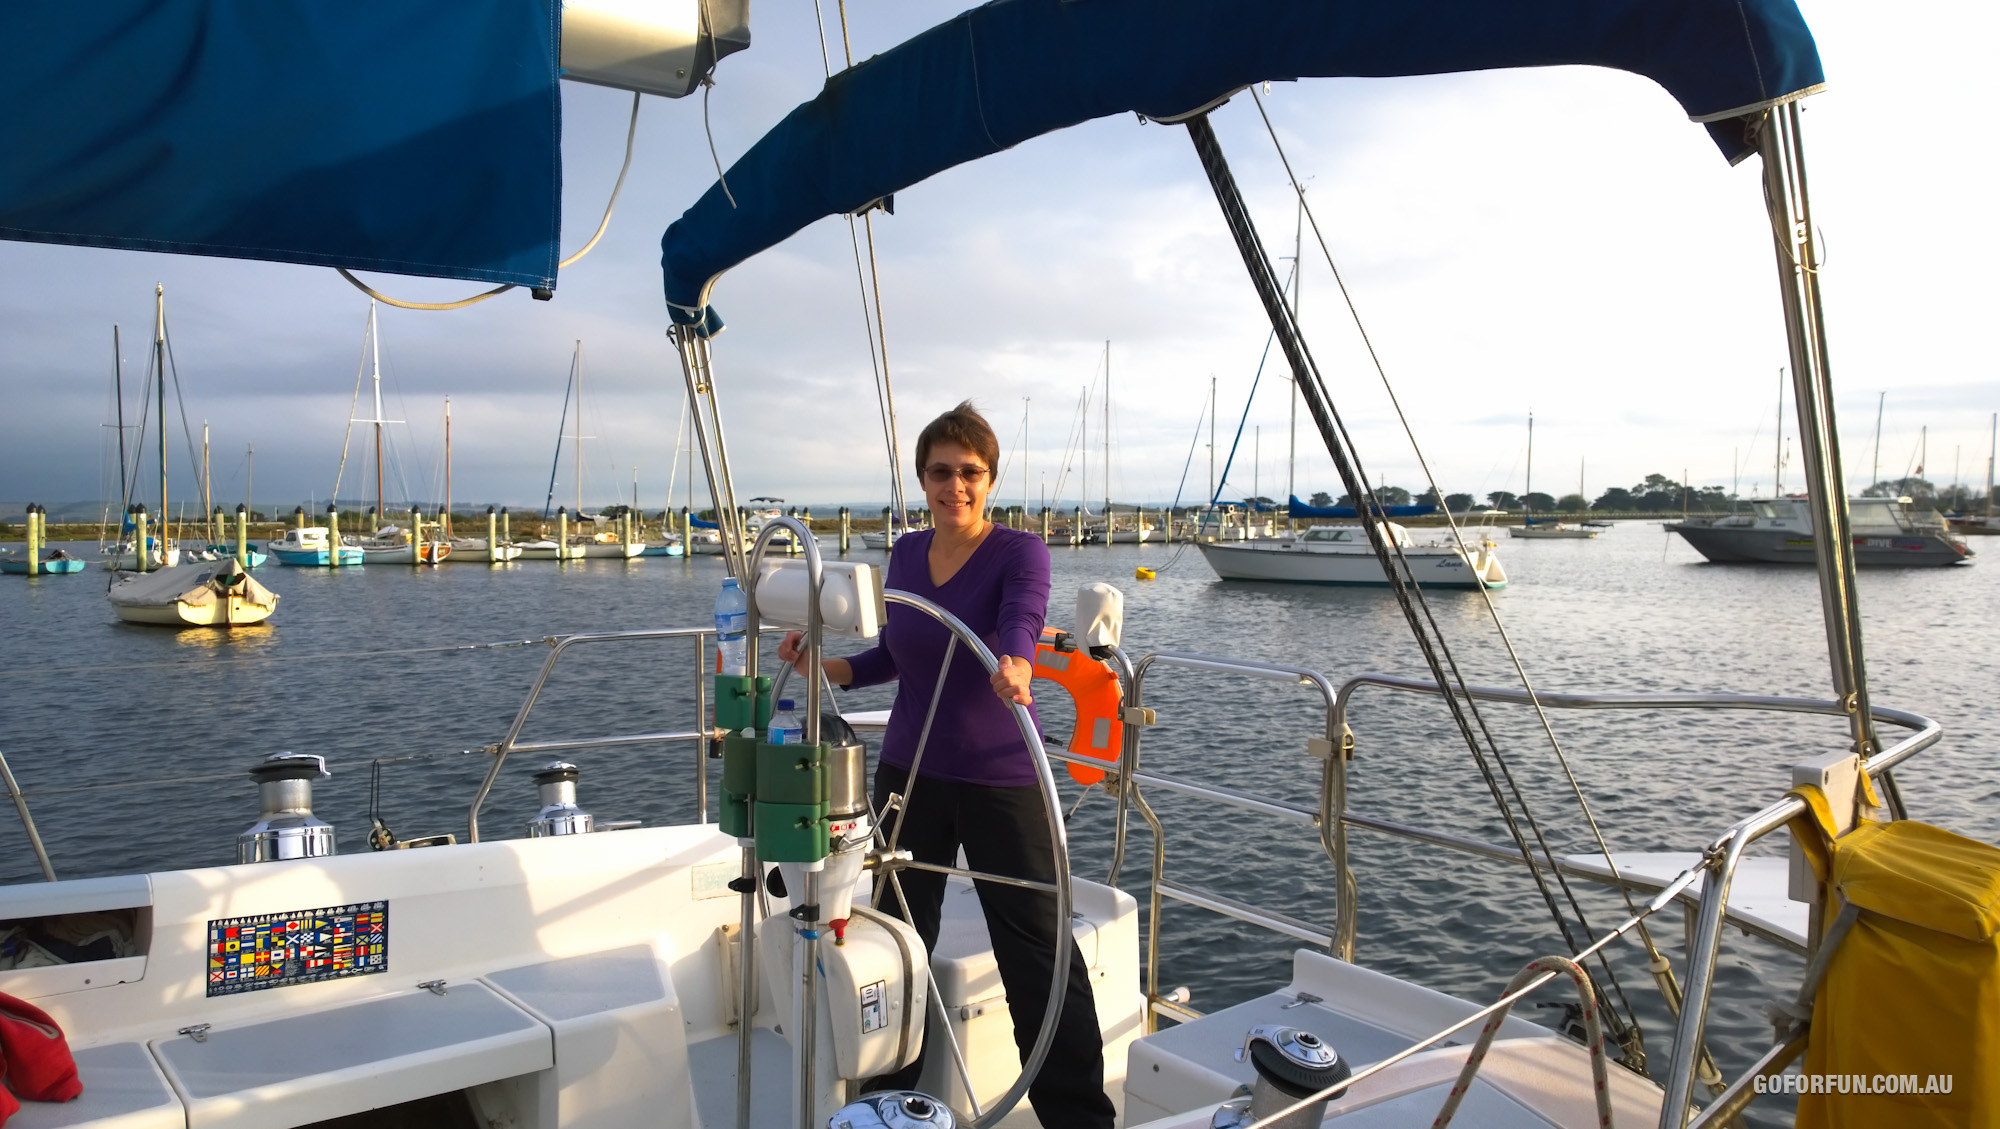 WP_20170423_07_48_28_Pro__highres_royal-geelong-yacht-club-sailing-sailboat-yacht-racing-australia-corio-bay-melbourne-queenscliff-swan-island-victoria